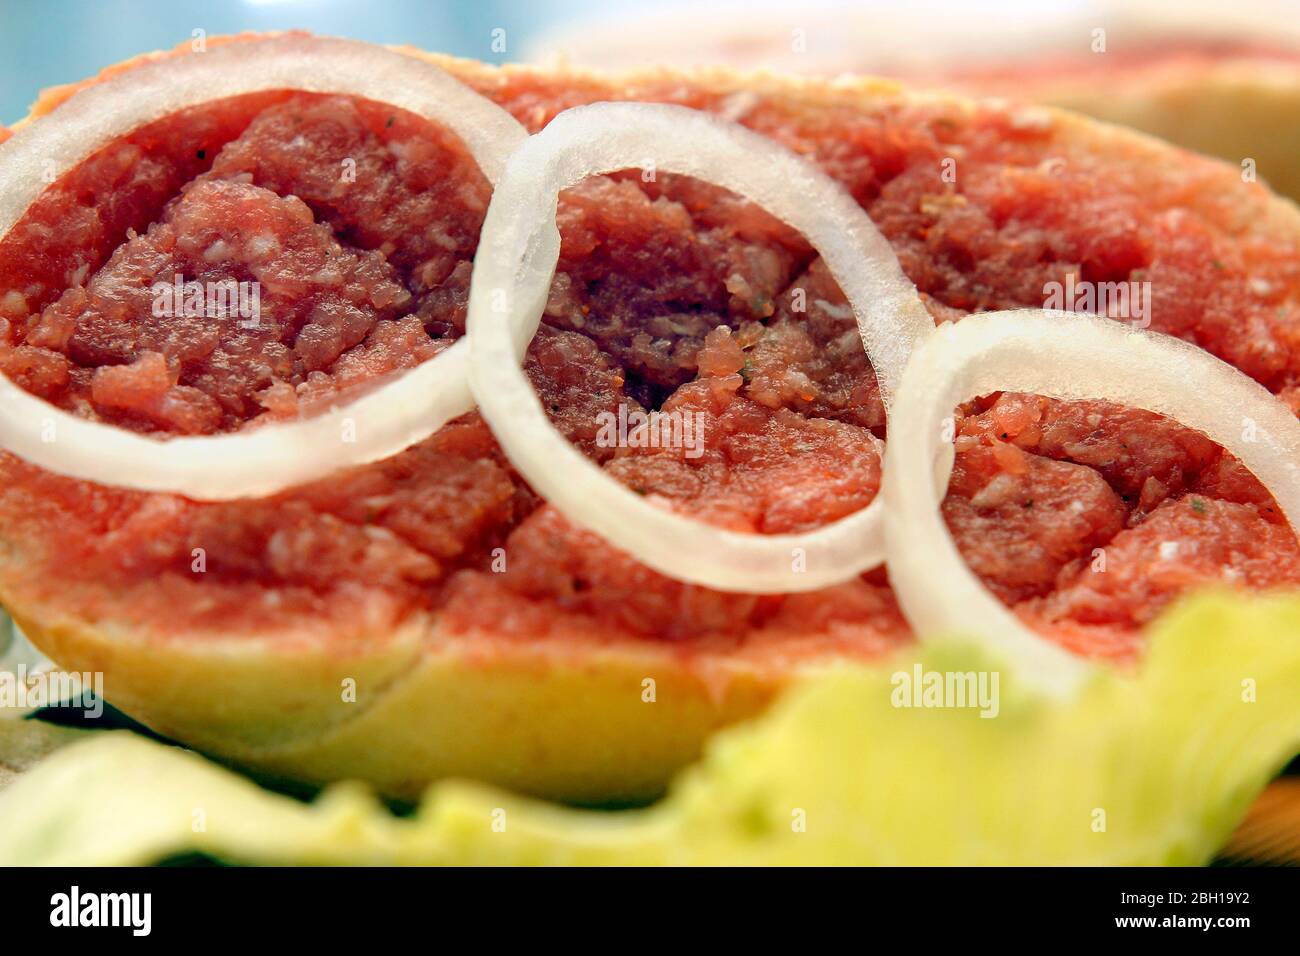 half Mett on bread roll with onion rings on lettuce, Germany Stock Photo